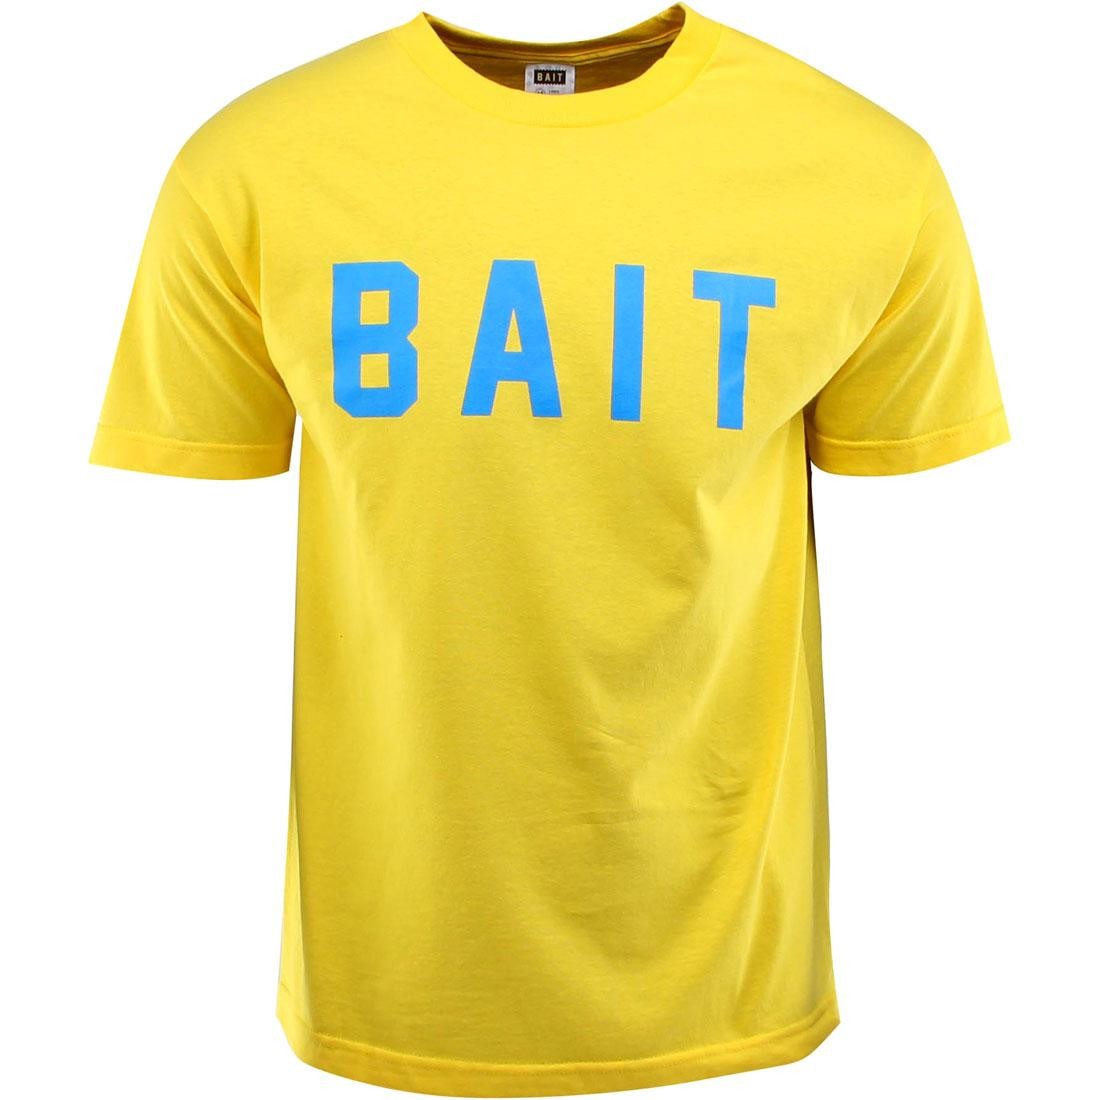 BAIT Logo Tee (yellow / blue)